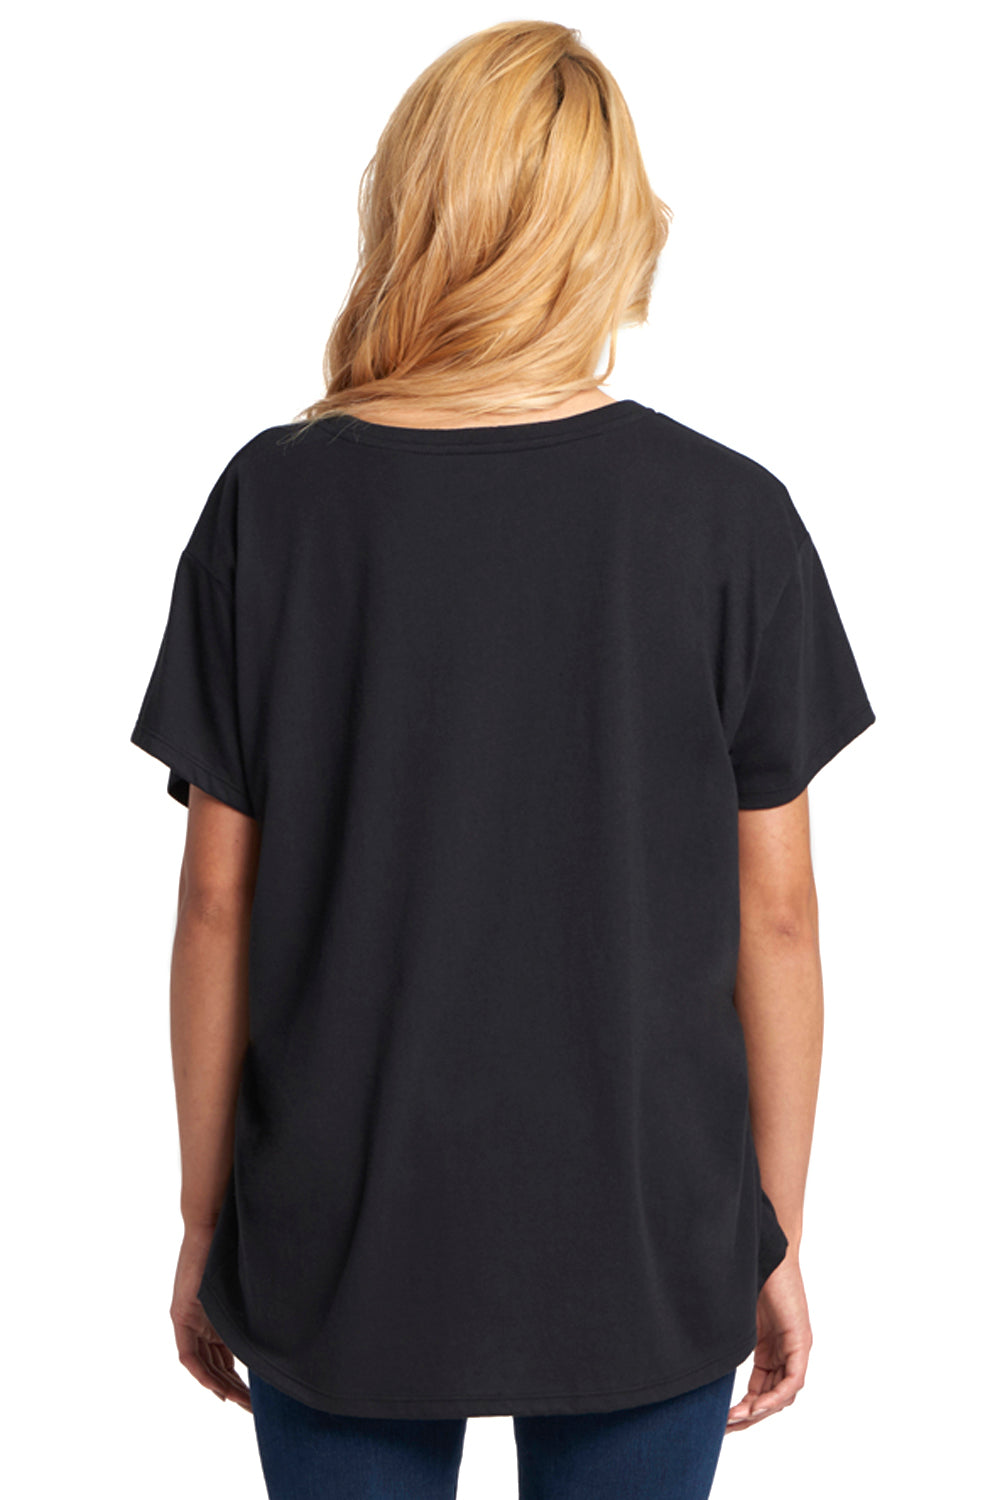 Next Level N1530 Womens Ideal Flow Short Sleeve Crewneck T-Shirt Black Back